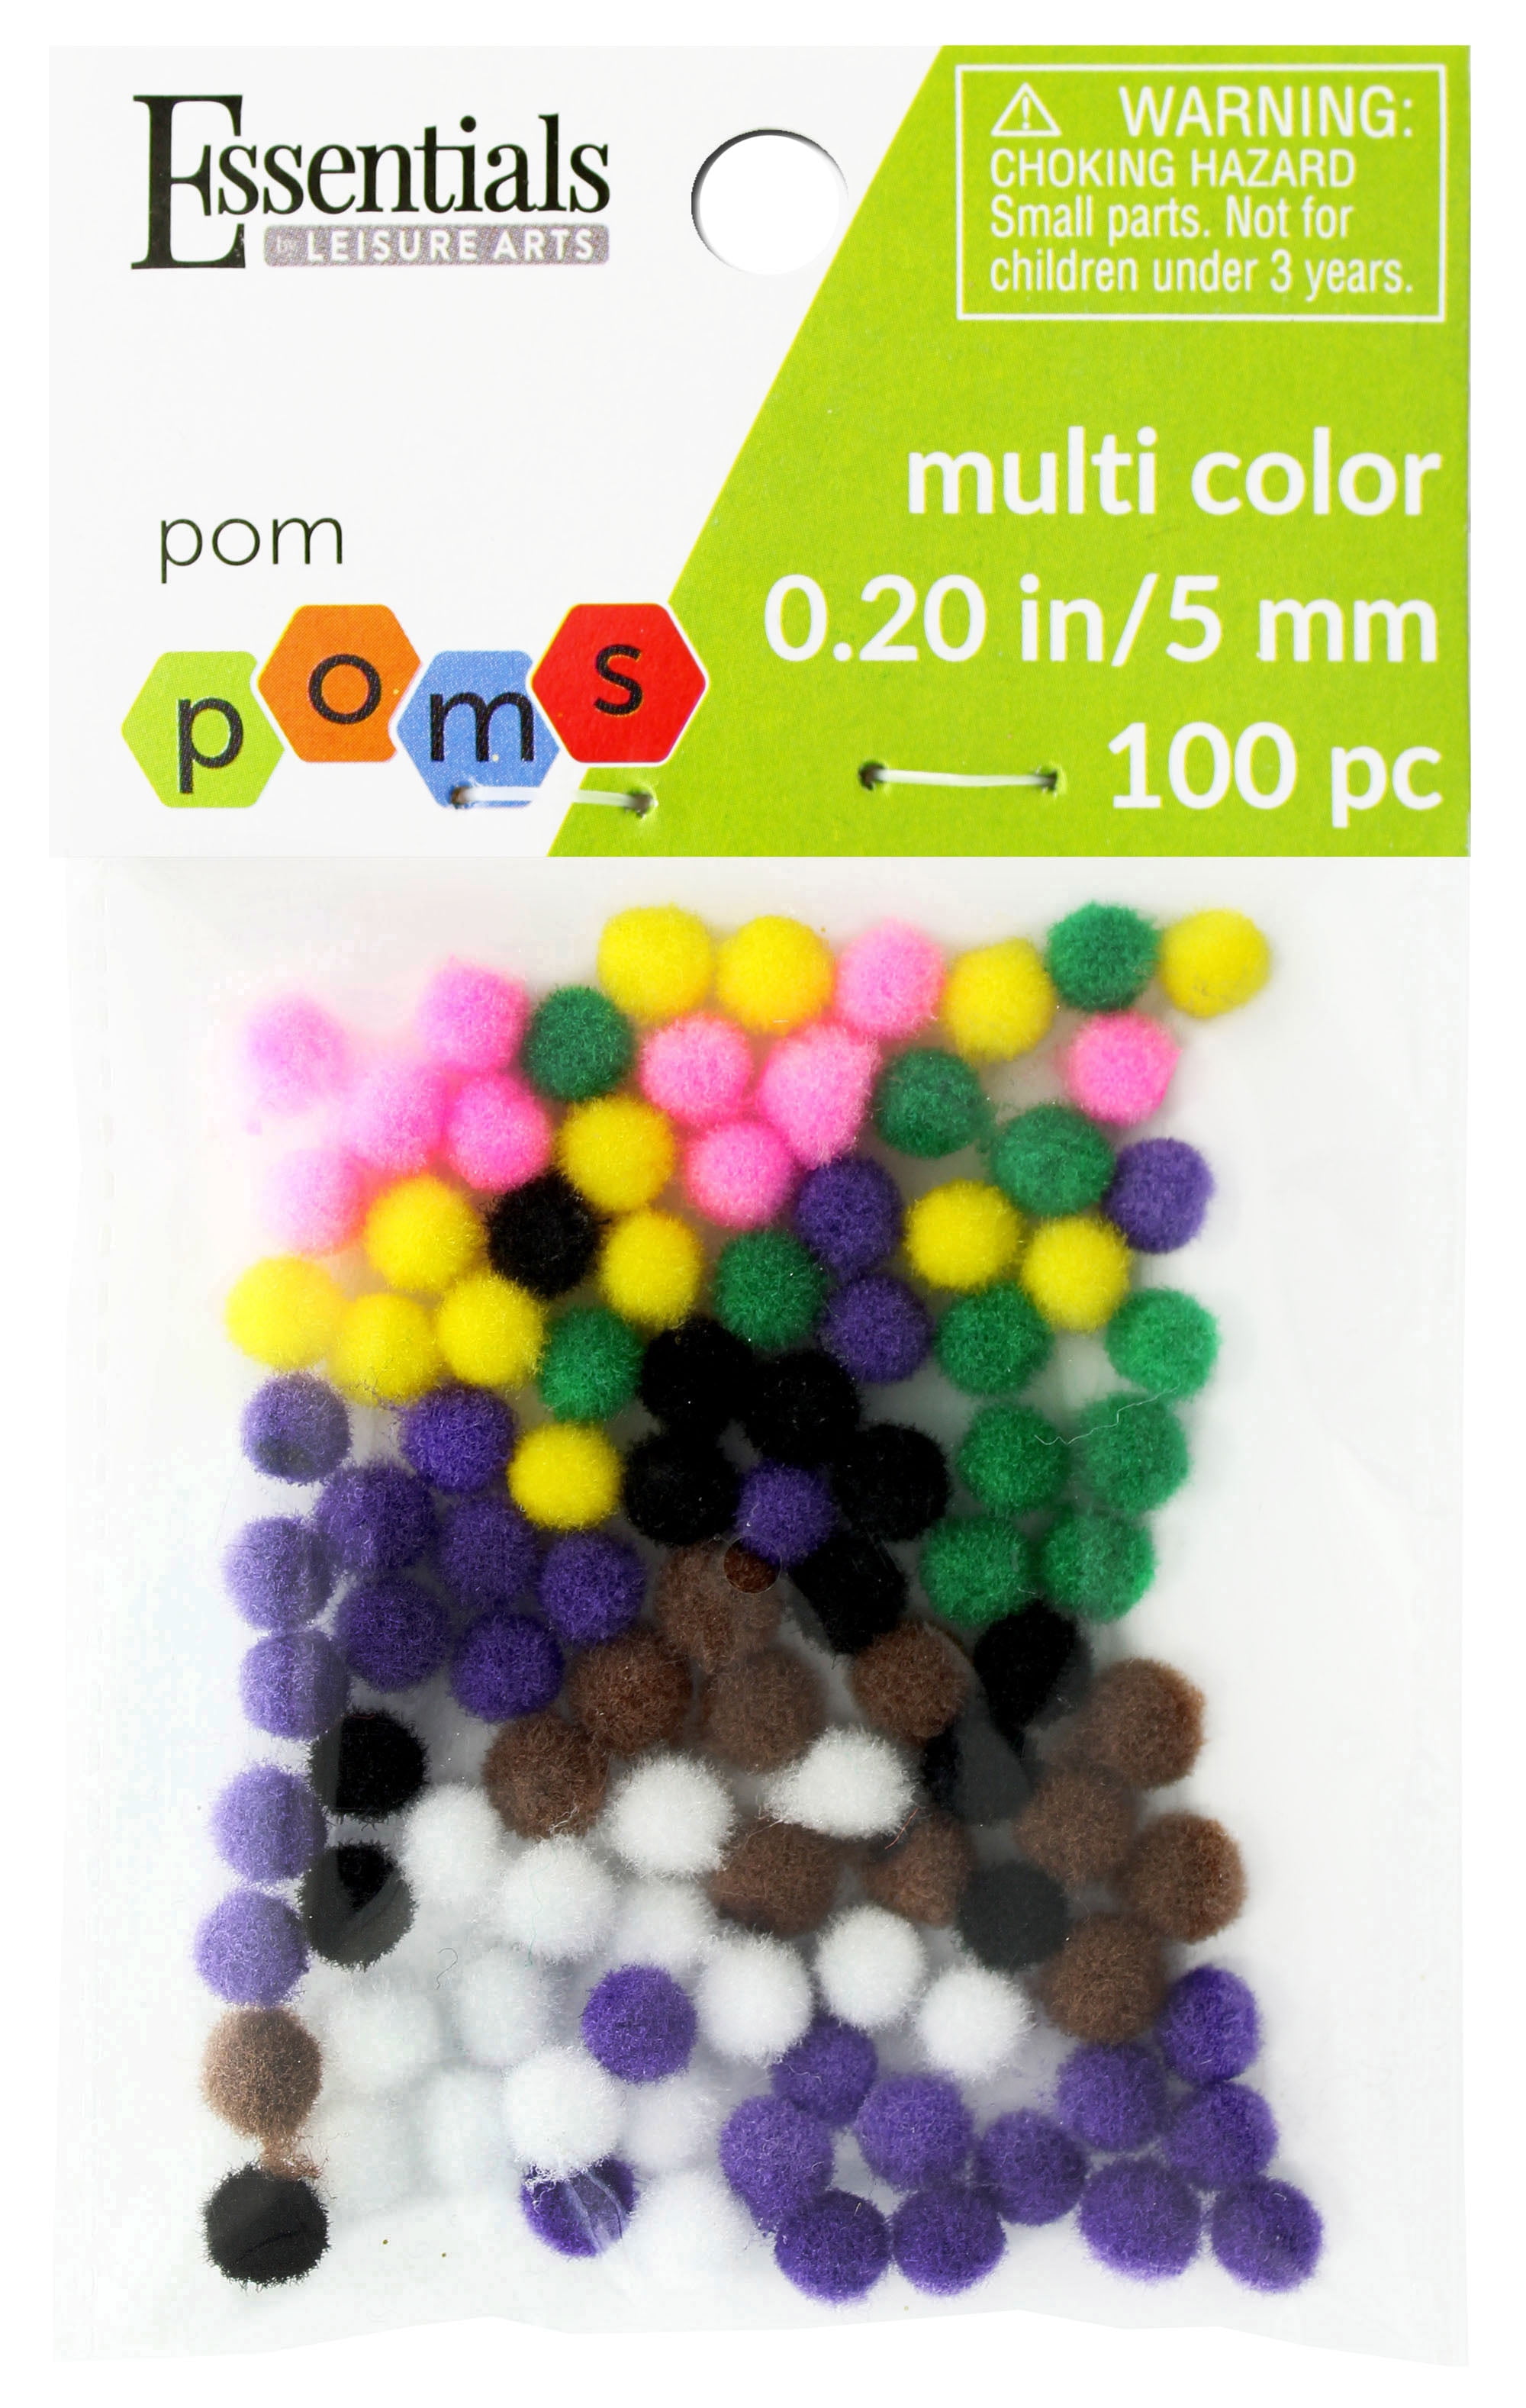 Essentials by Leisure Arts, Pom Pom, 5mm, Multi, 100pc